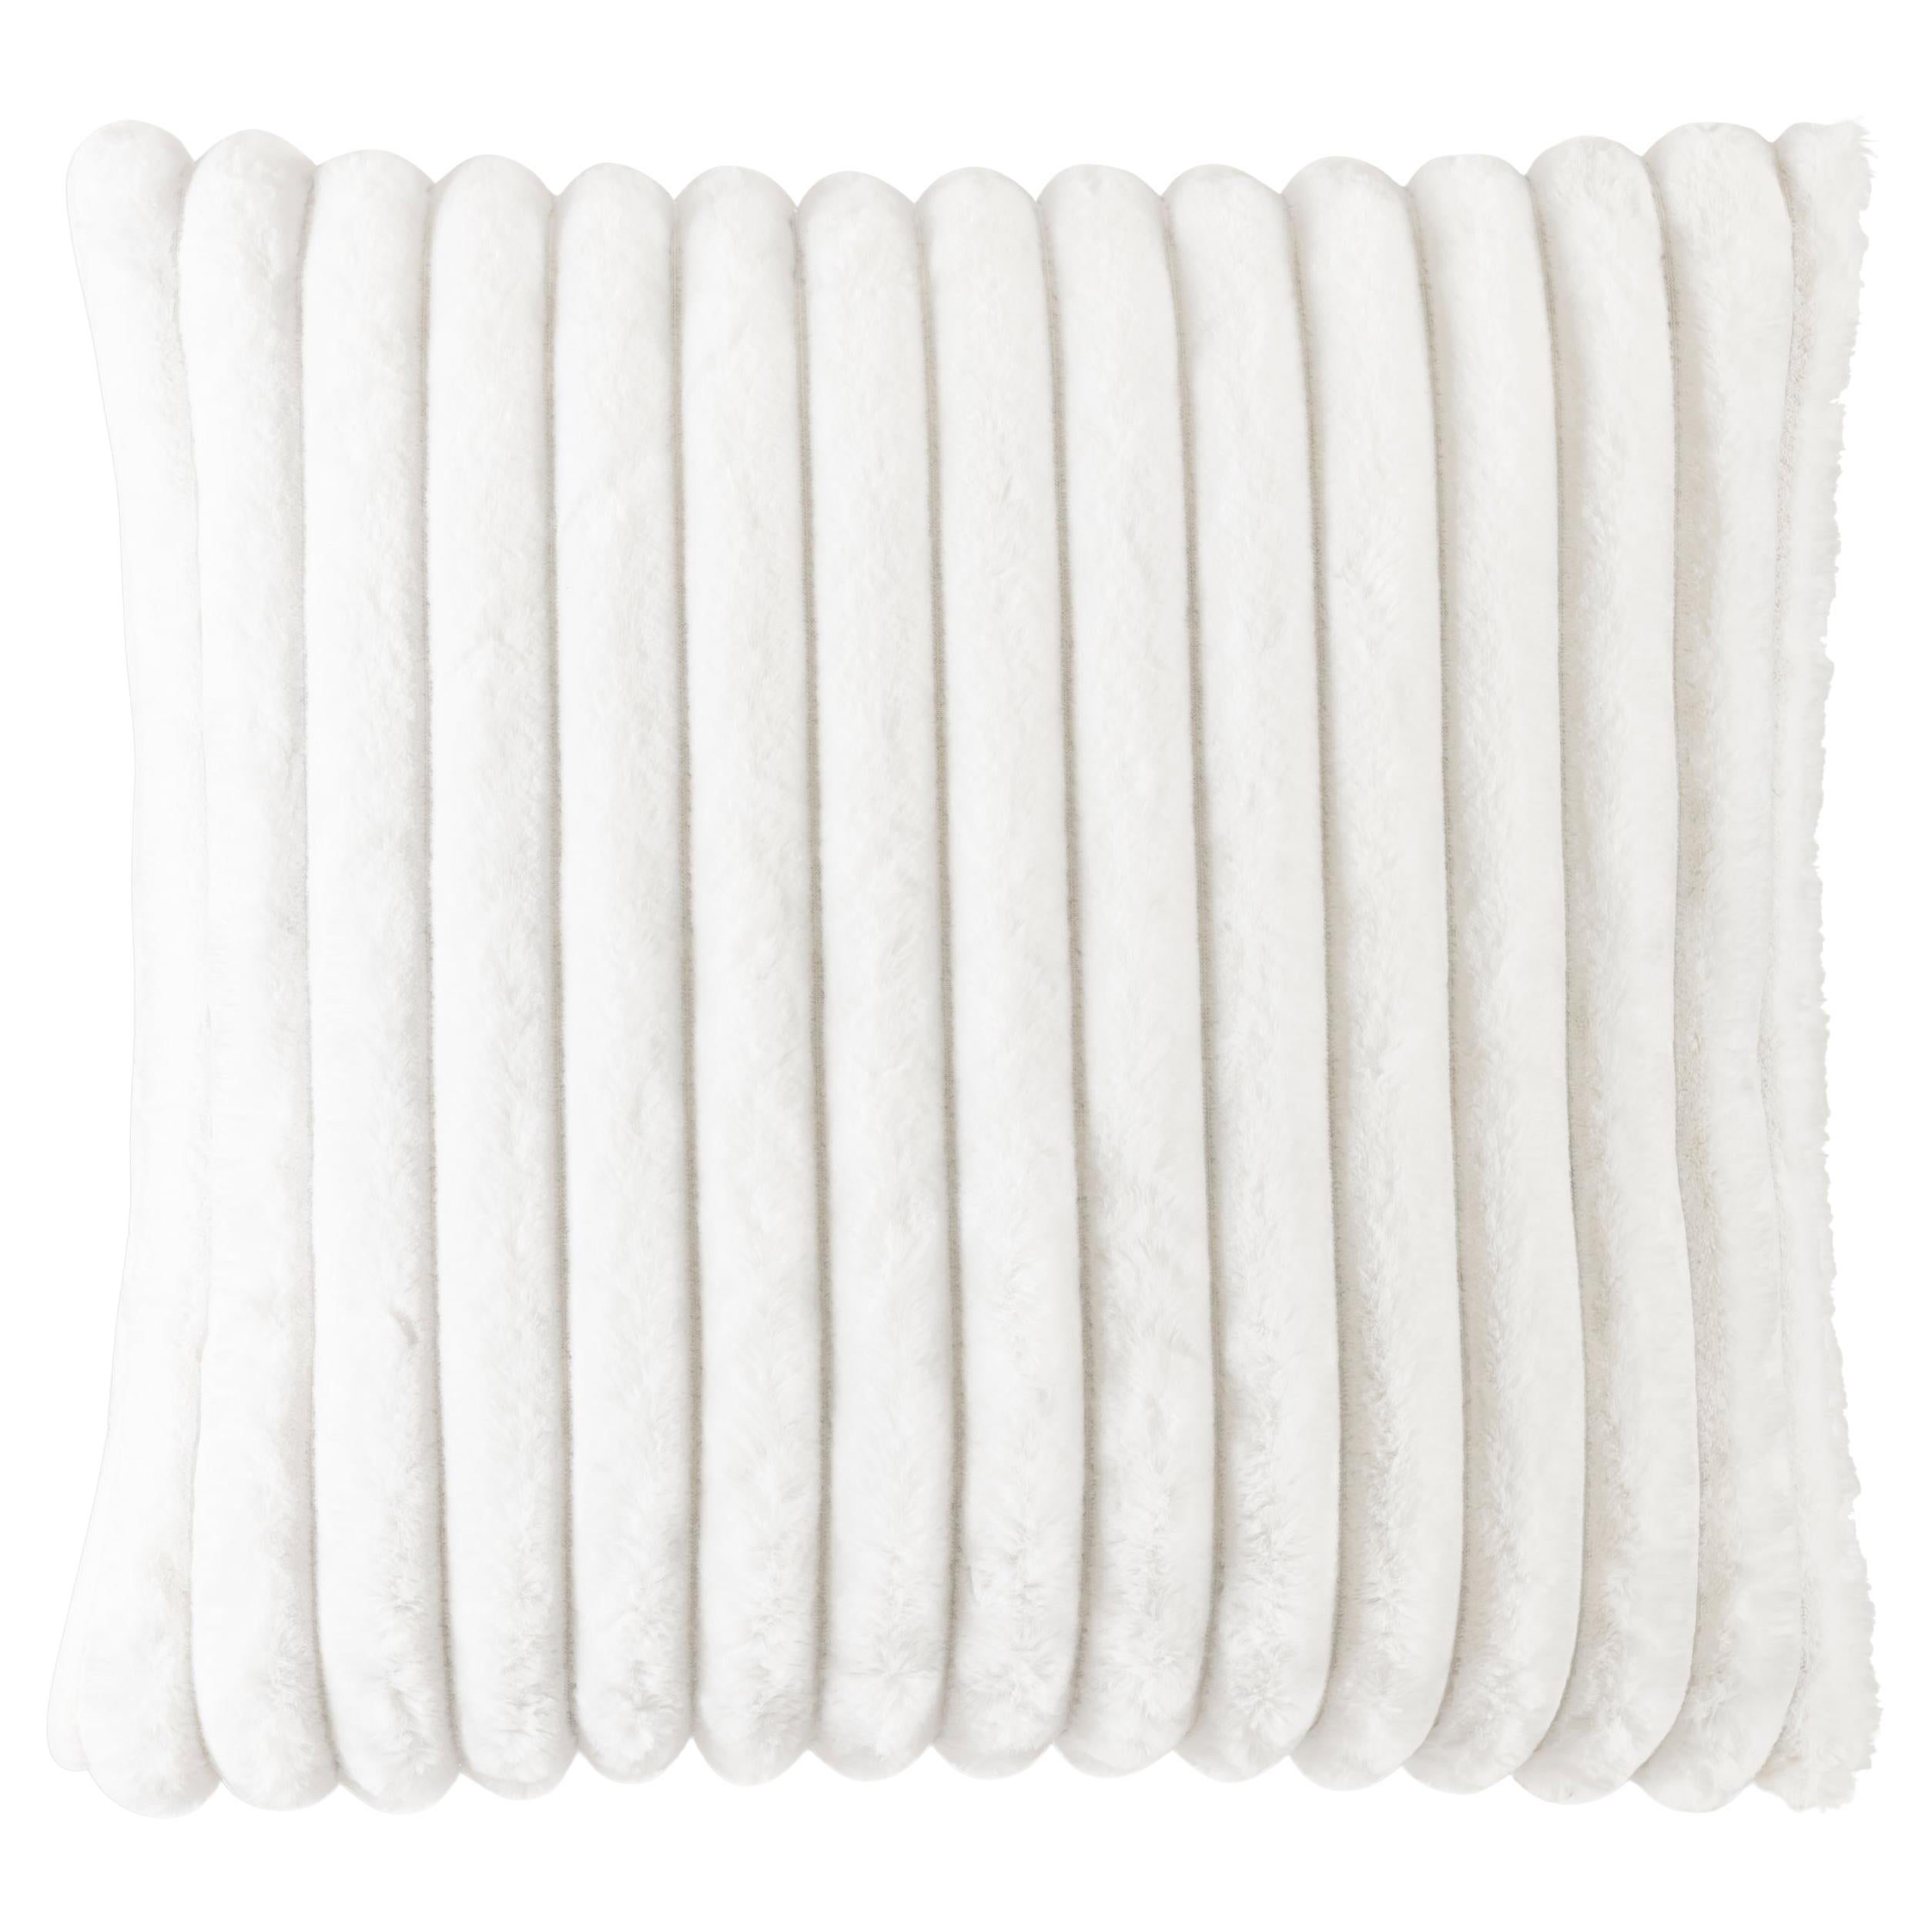 Lux White Fur Pillow